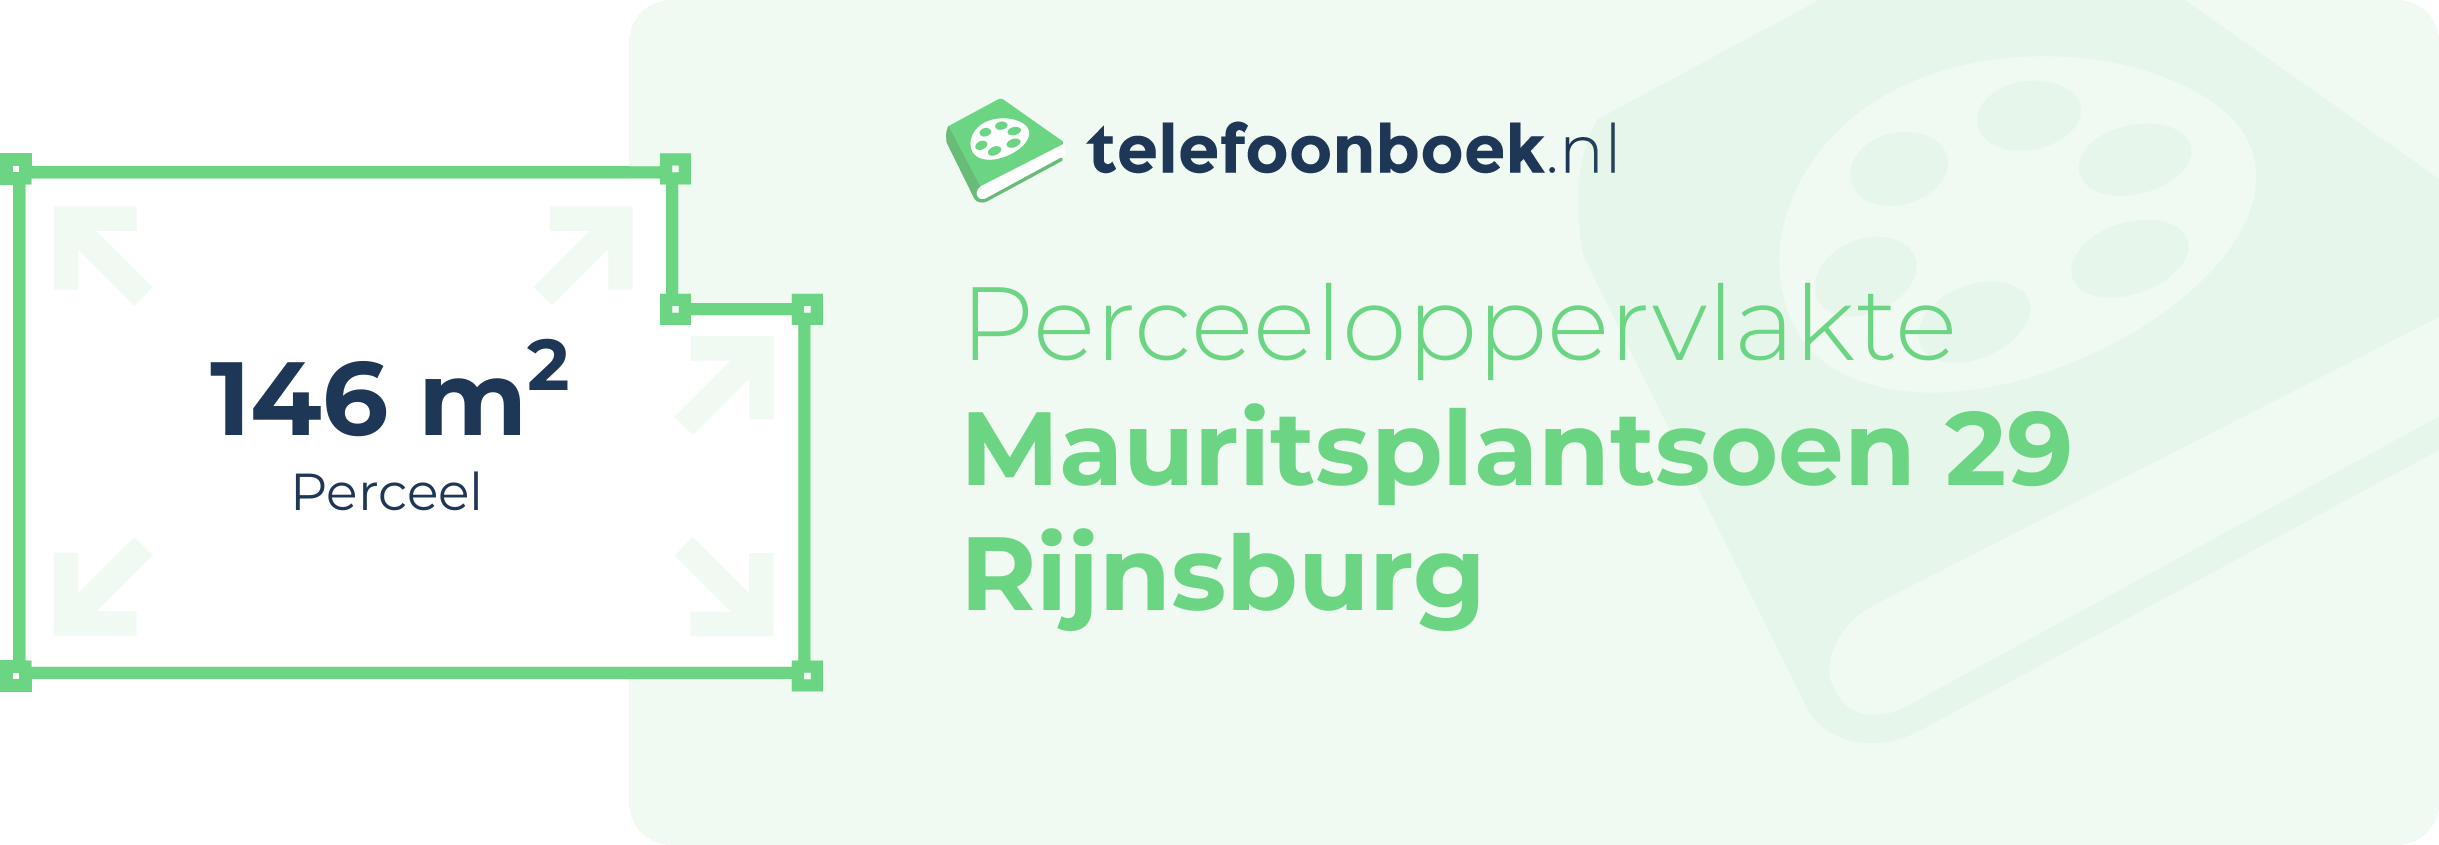 Perceeloppervlakte Mauritsplantsoen 29 Rijnsburg